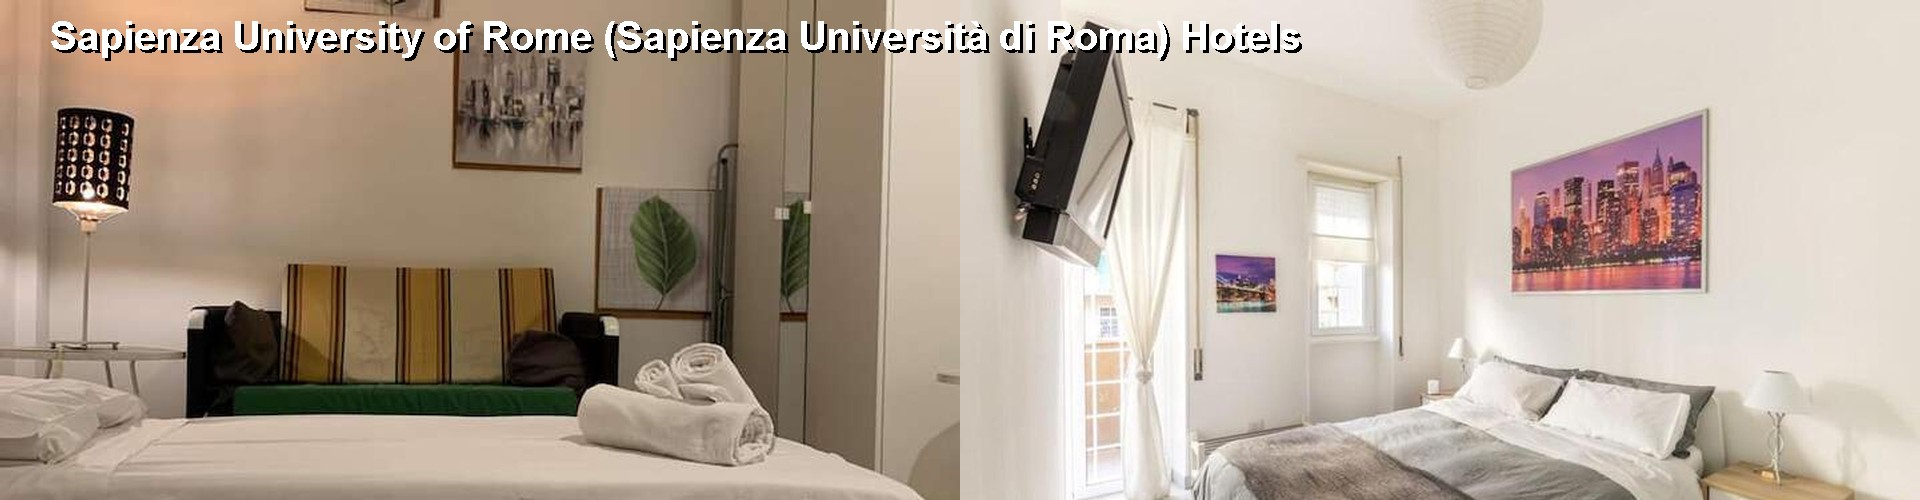 5 Best Hotels near Sapienza University of Rome (Sapienza Università di Roma)